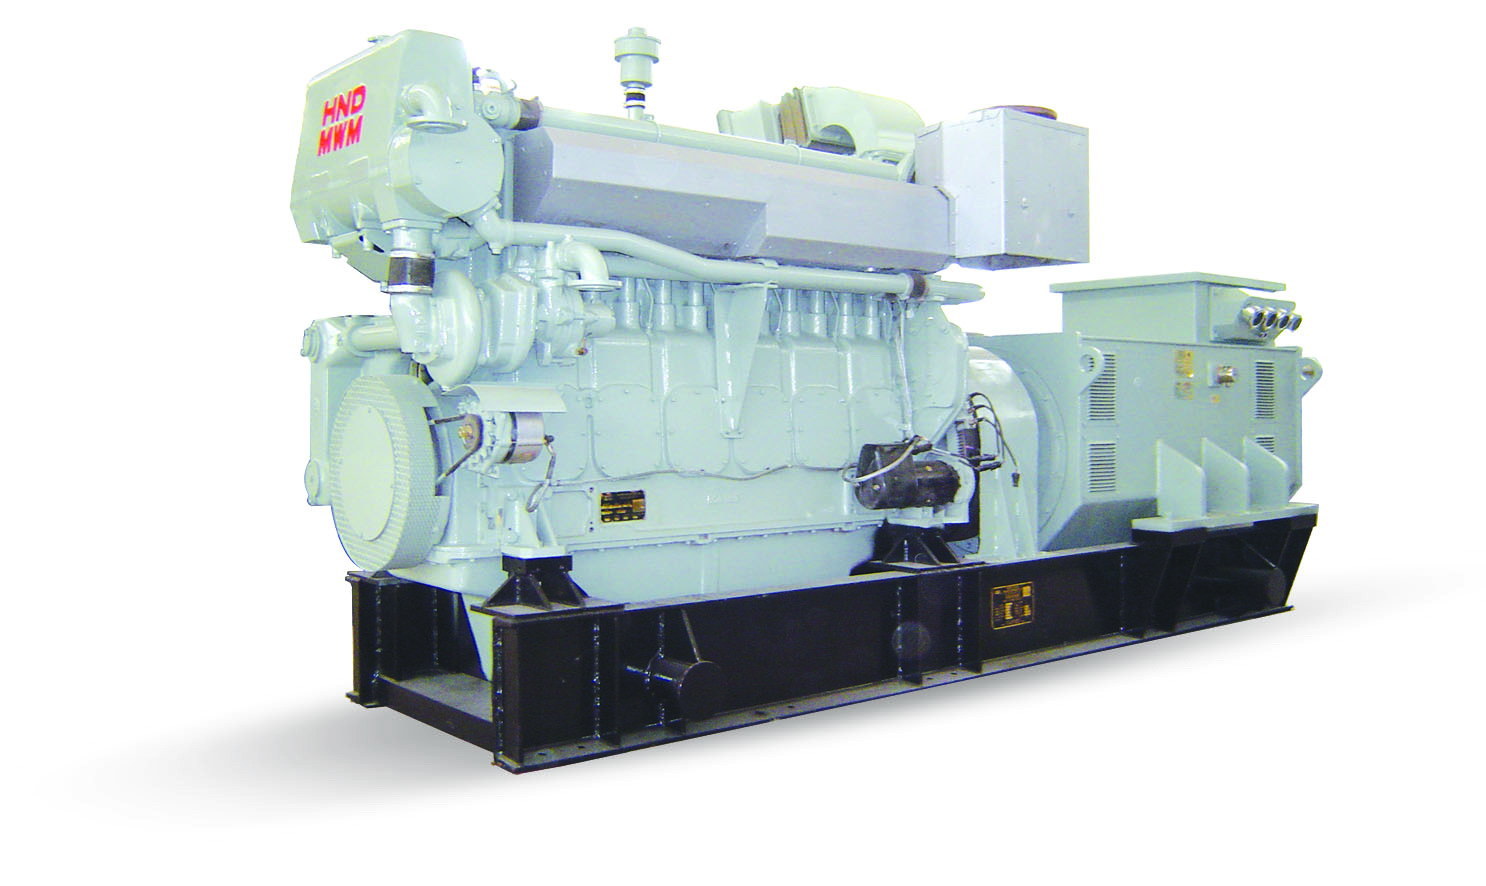 Marine Generator Sets (100kw MWM, water cooling) (CCFJ100JW)